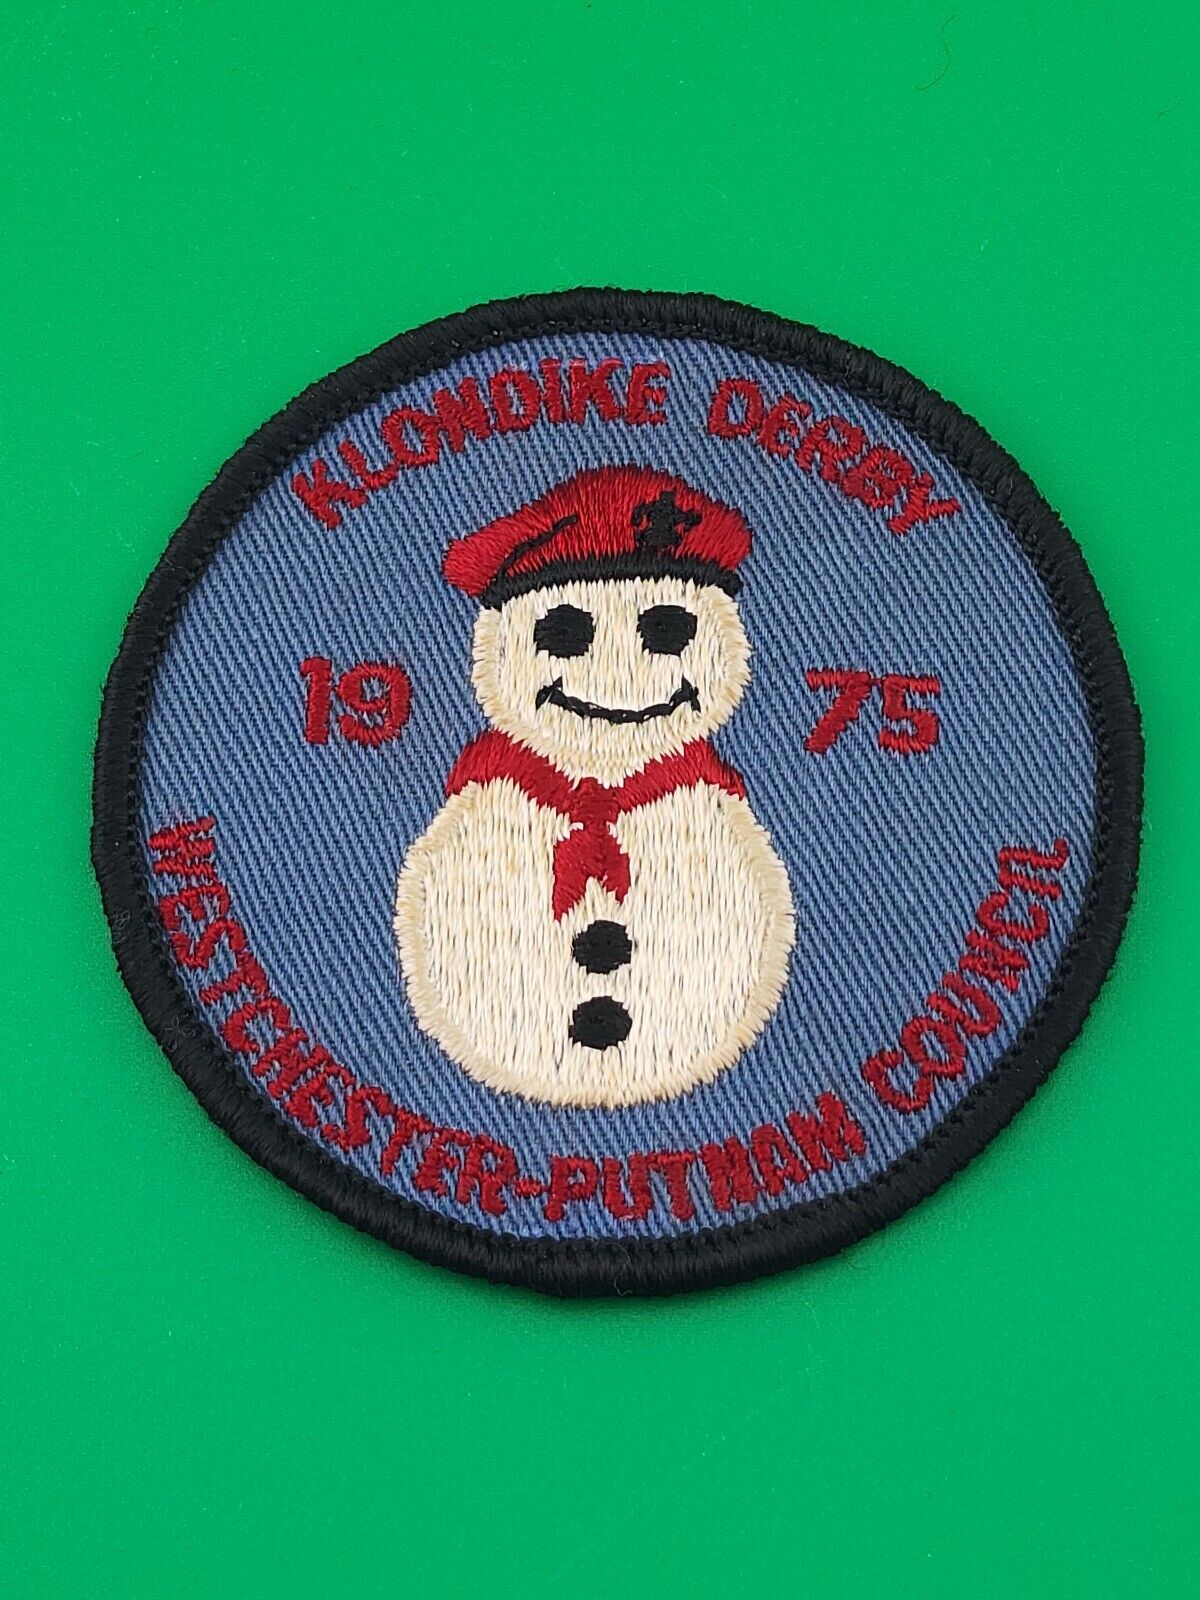 Klondike Derby 1975 Westchester-Putnam Council Patch BSA Boy Scouts Of America